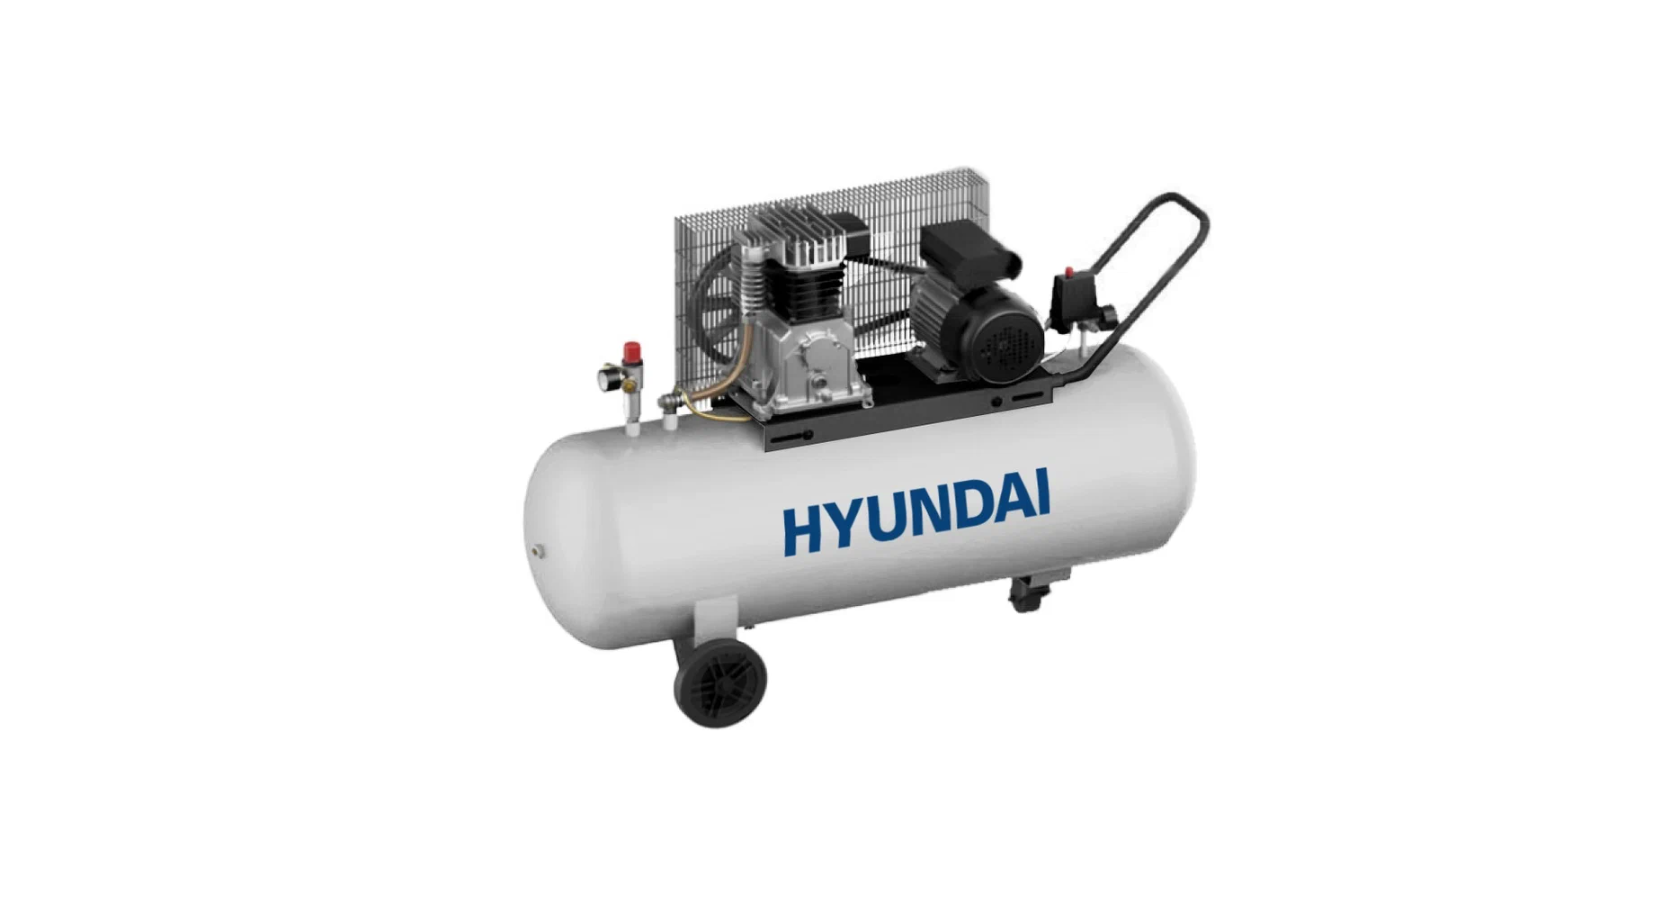 Воздушный компрессор Hyundai масляный HYC 40200-3BD компрессор воздушный безмаслянный deli dl wky25 e1